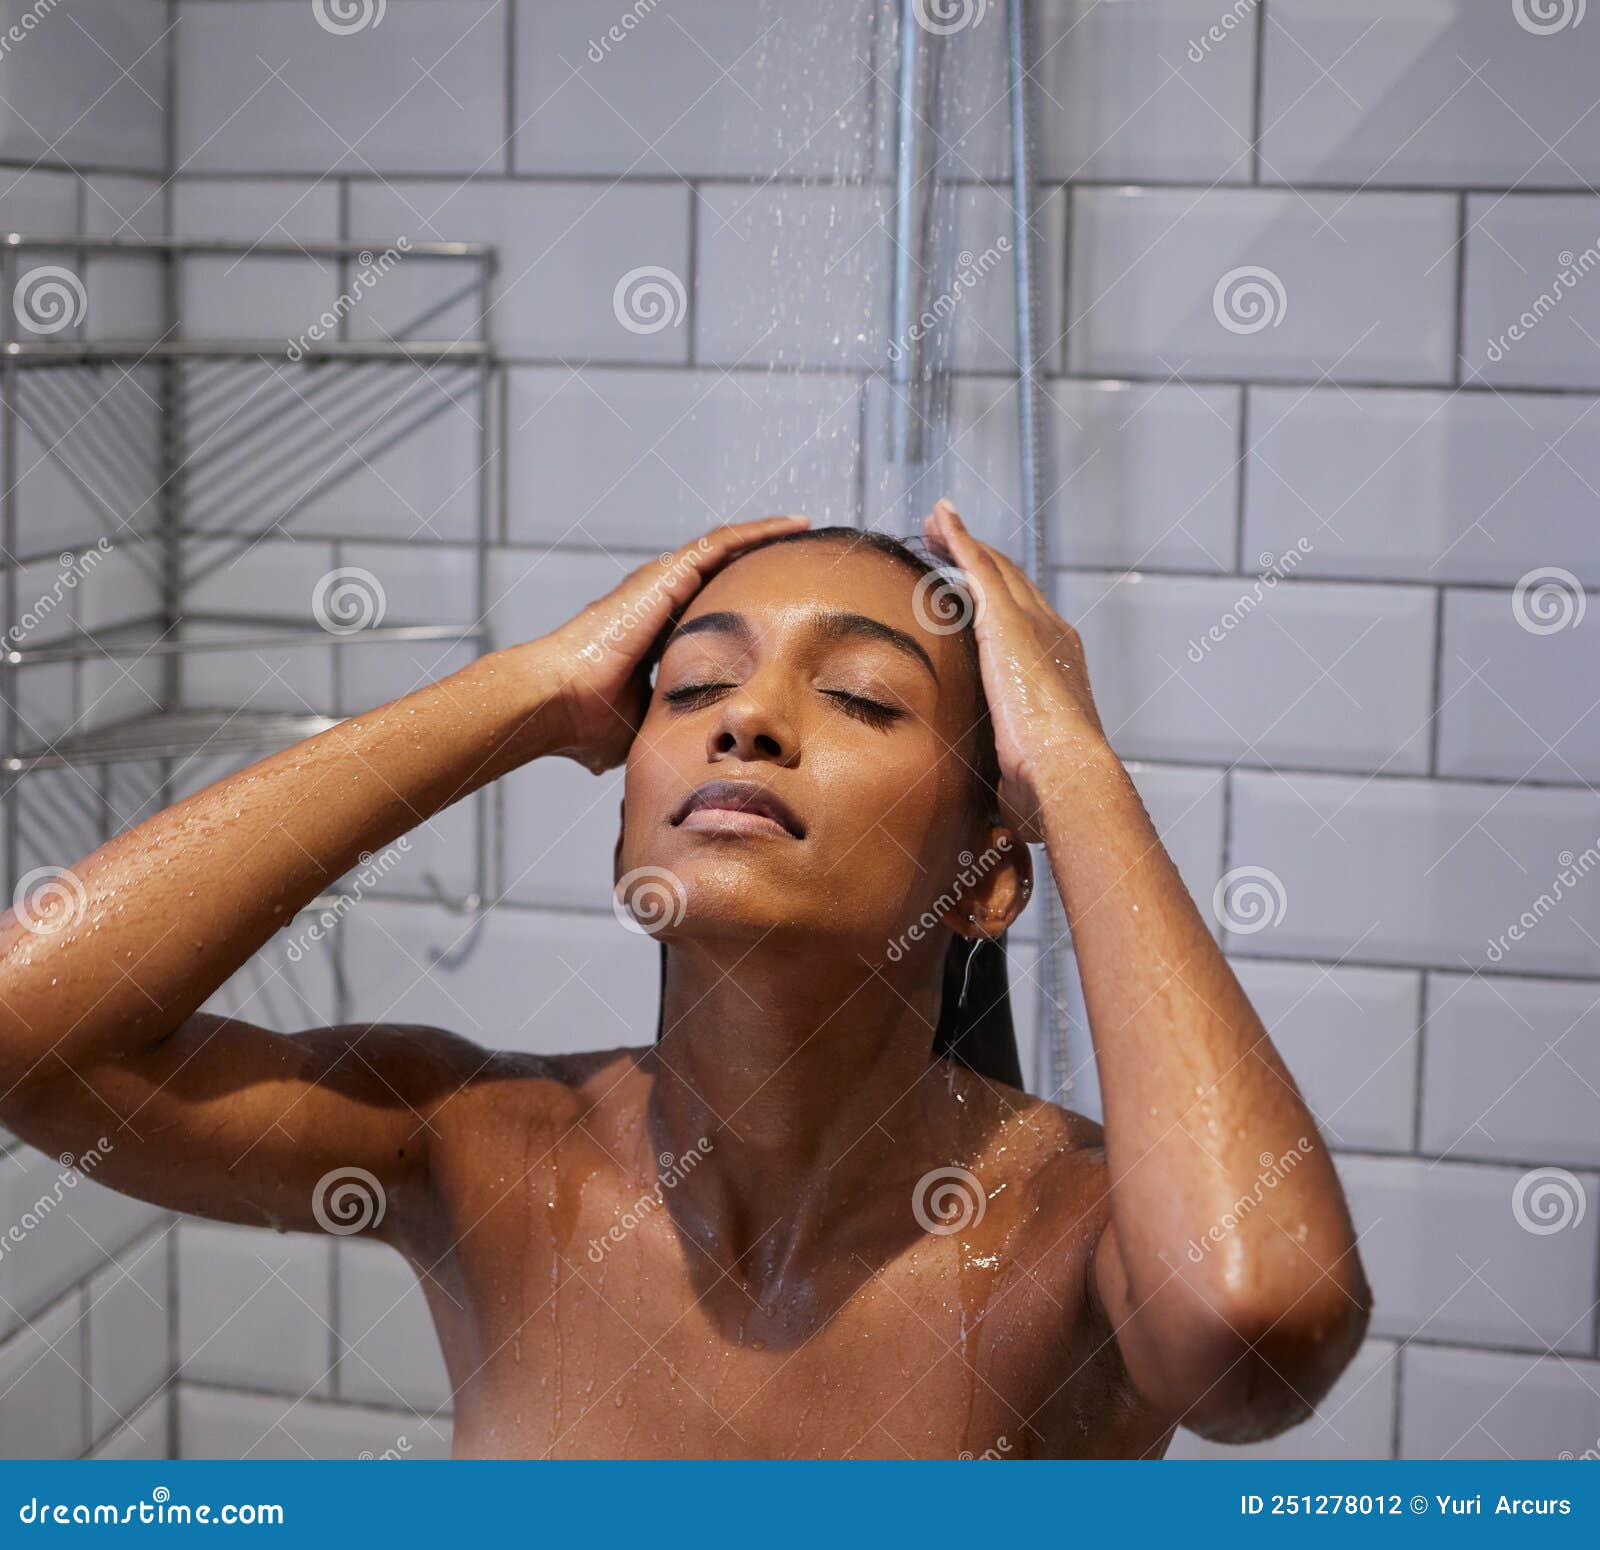 don edgar add hot women in the shower photo